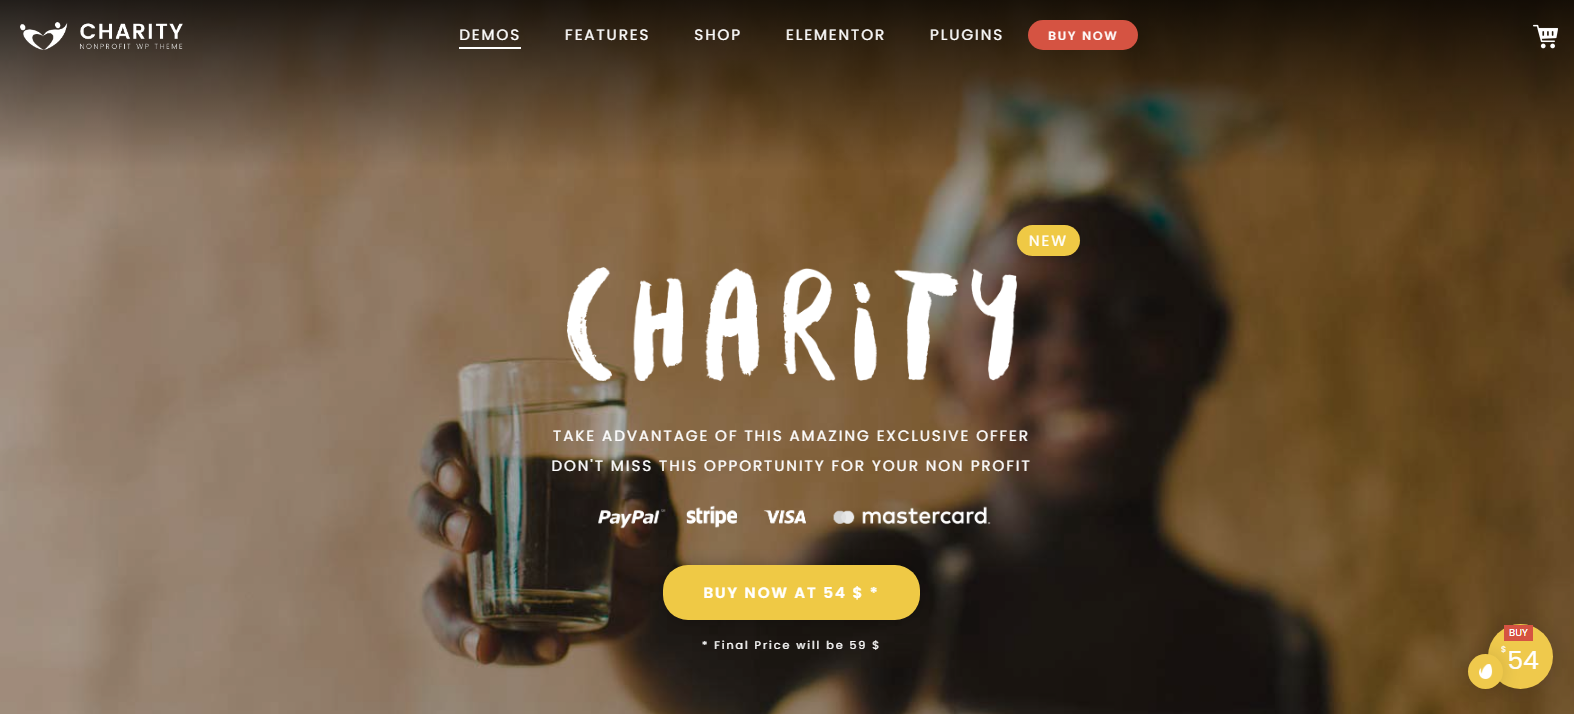 Charity Foundation v2.8 - Charity Hub WP Theme